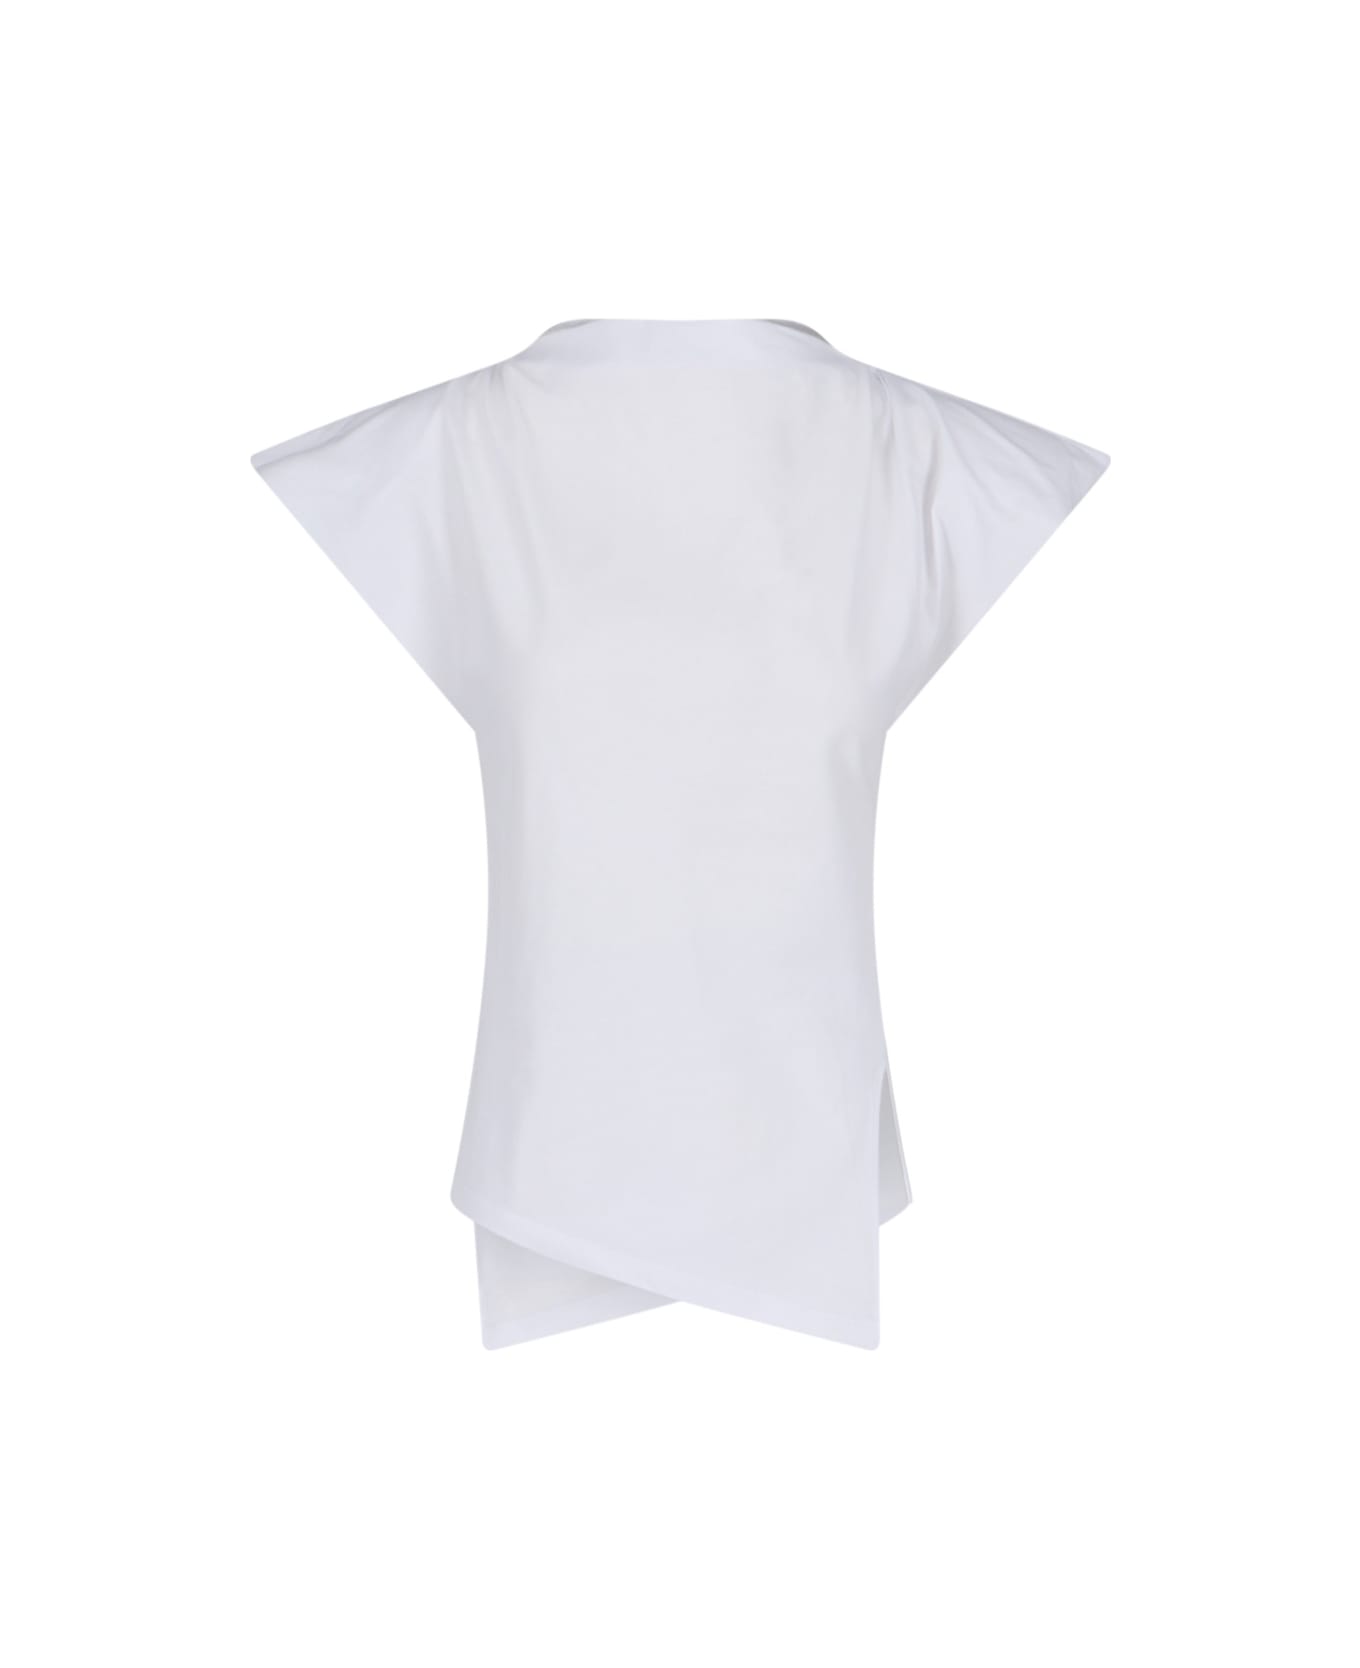 Isabel Marant Sebani T-shirt - White